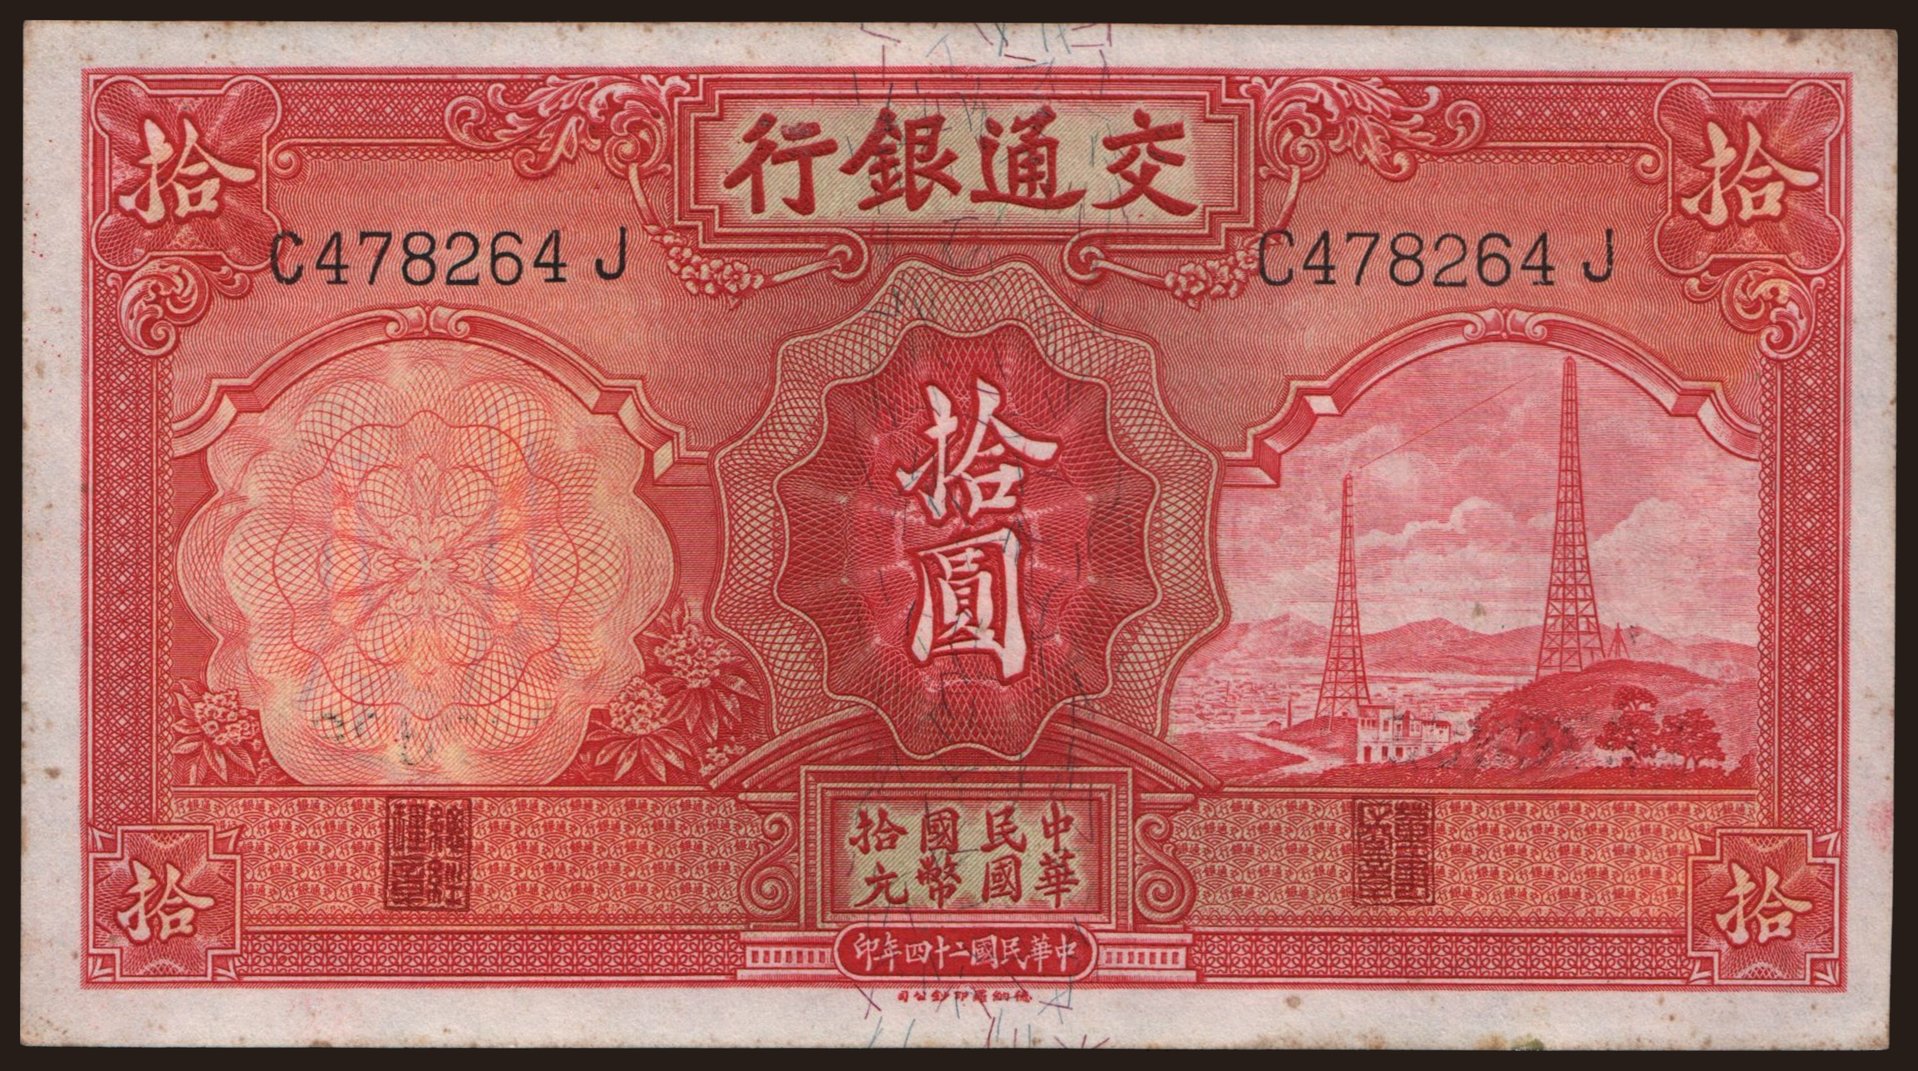 Bank of Communications, 10 yuan, 1935